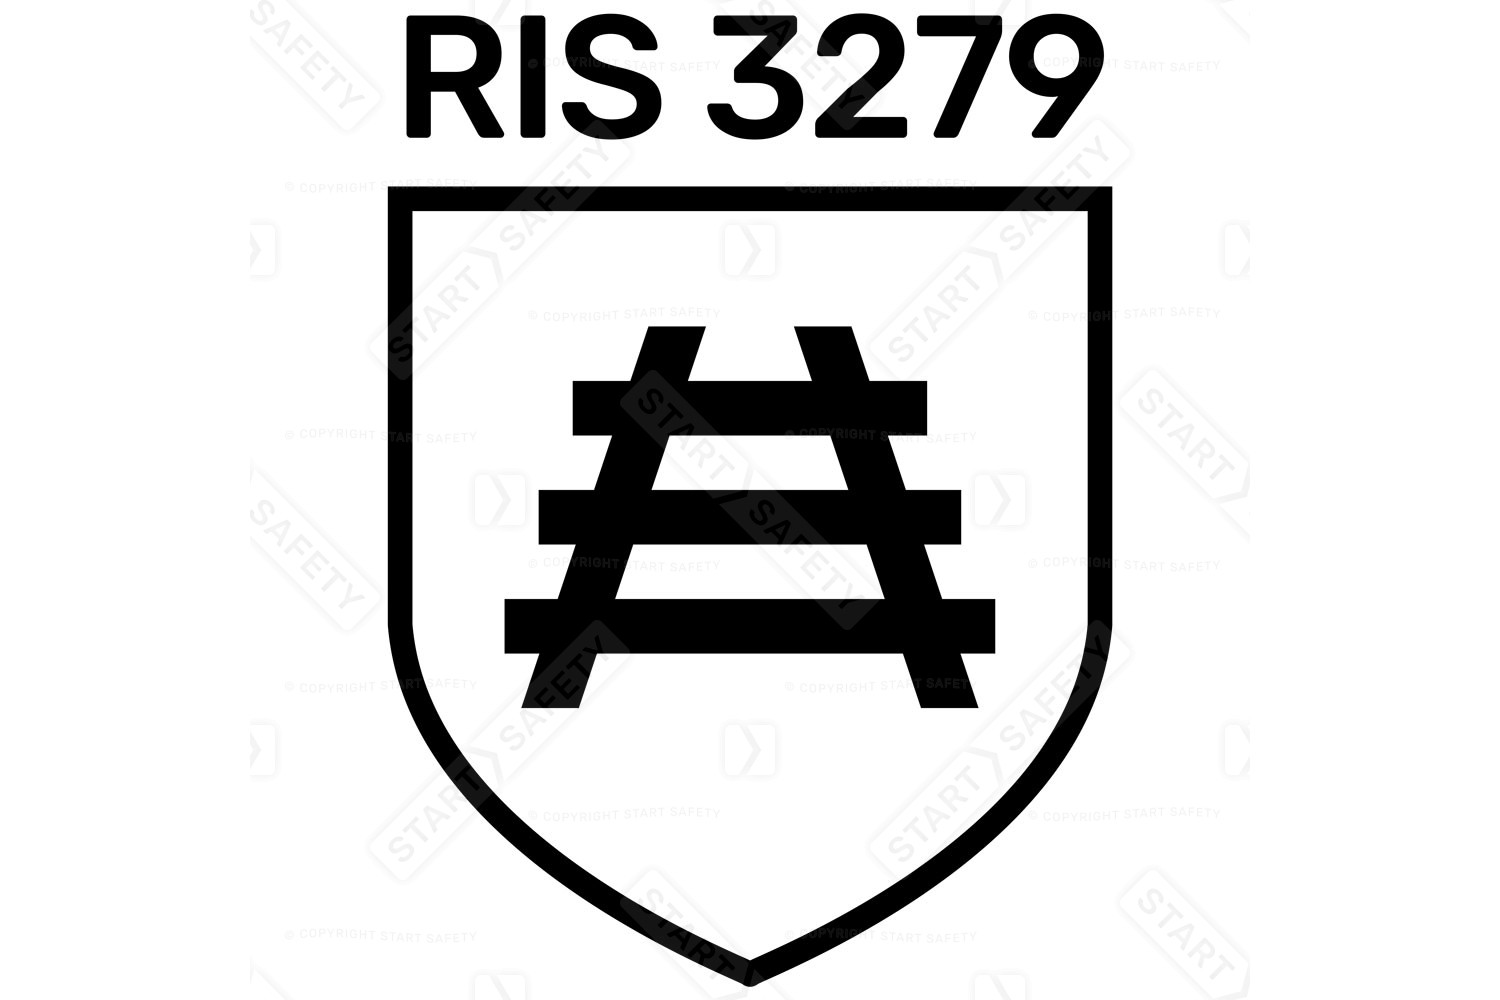 RIS 3279 Railway Workwear Standard